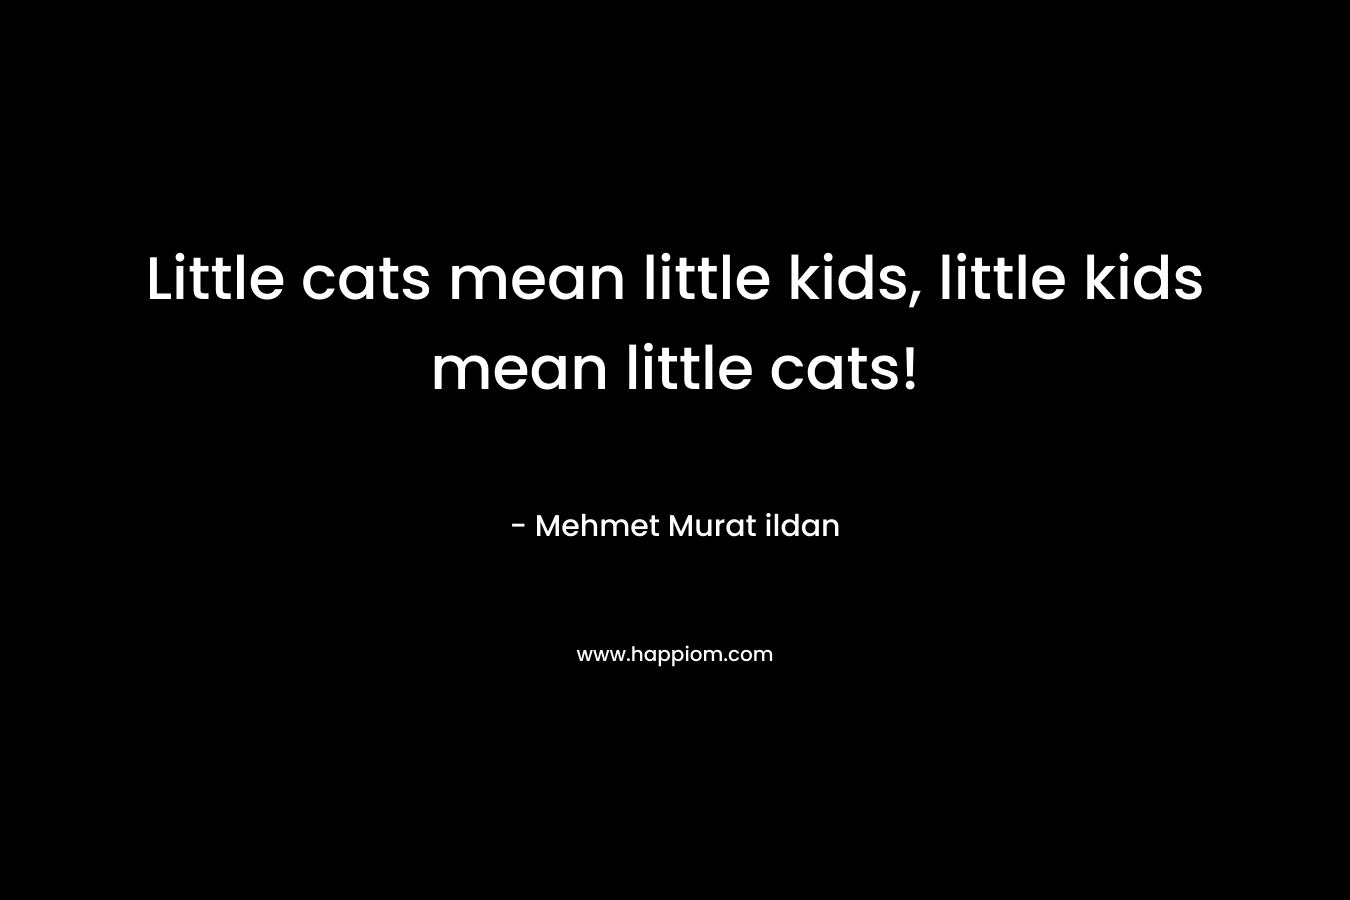 Little cats mean little kids, little kids mean little cats!